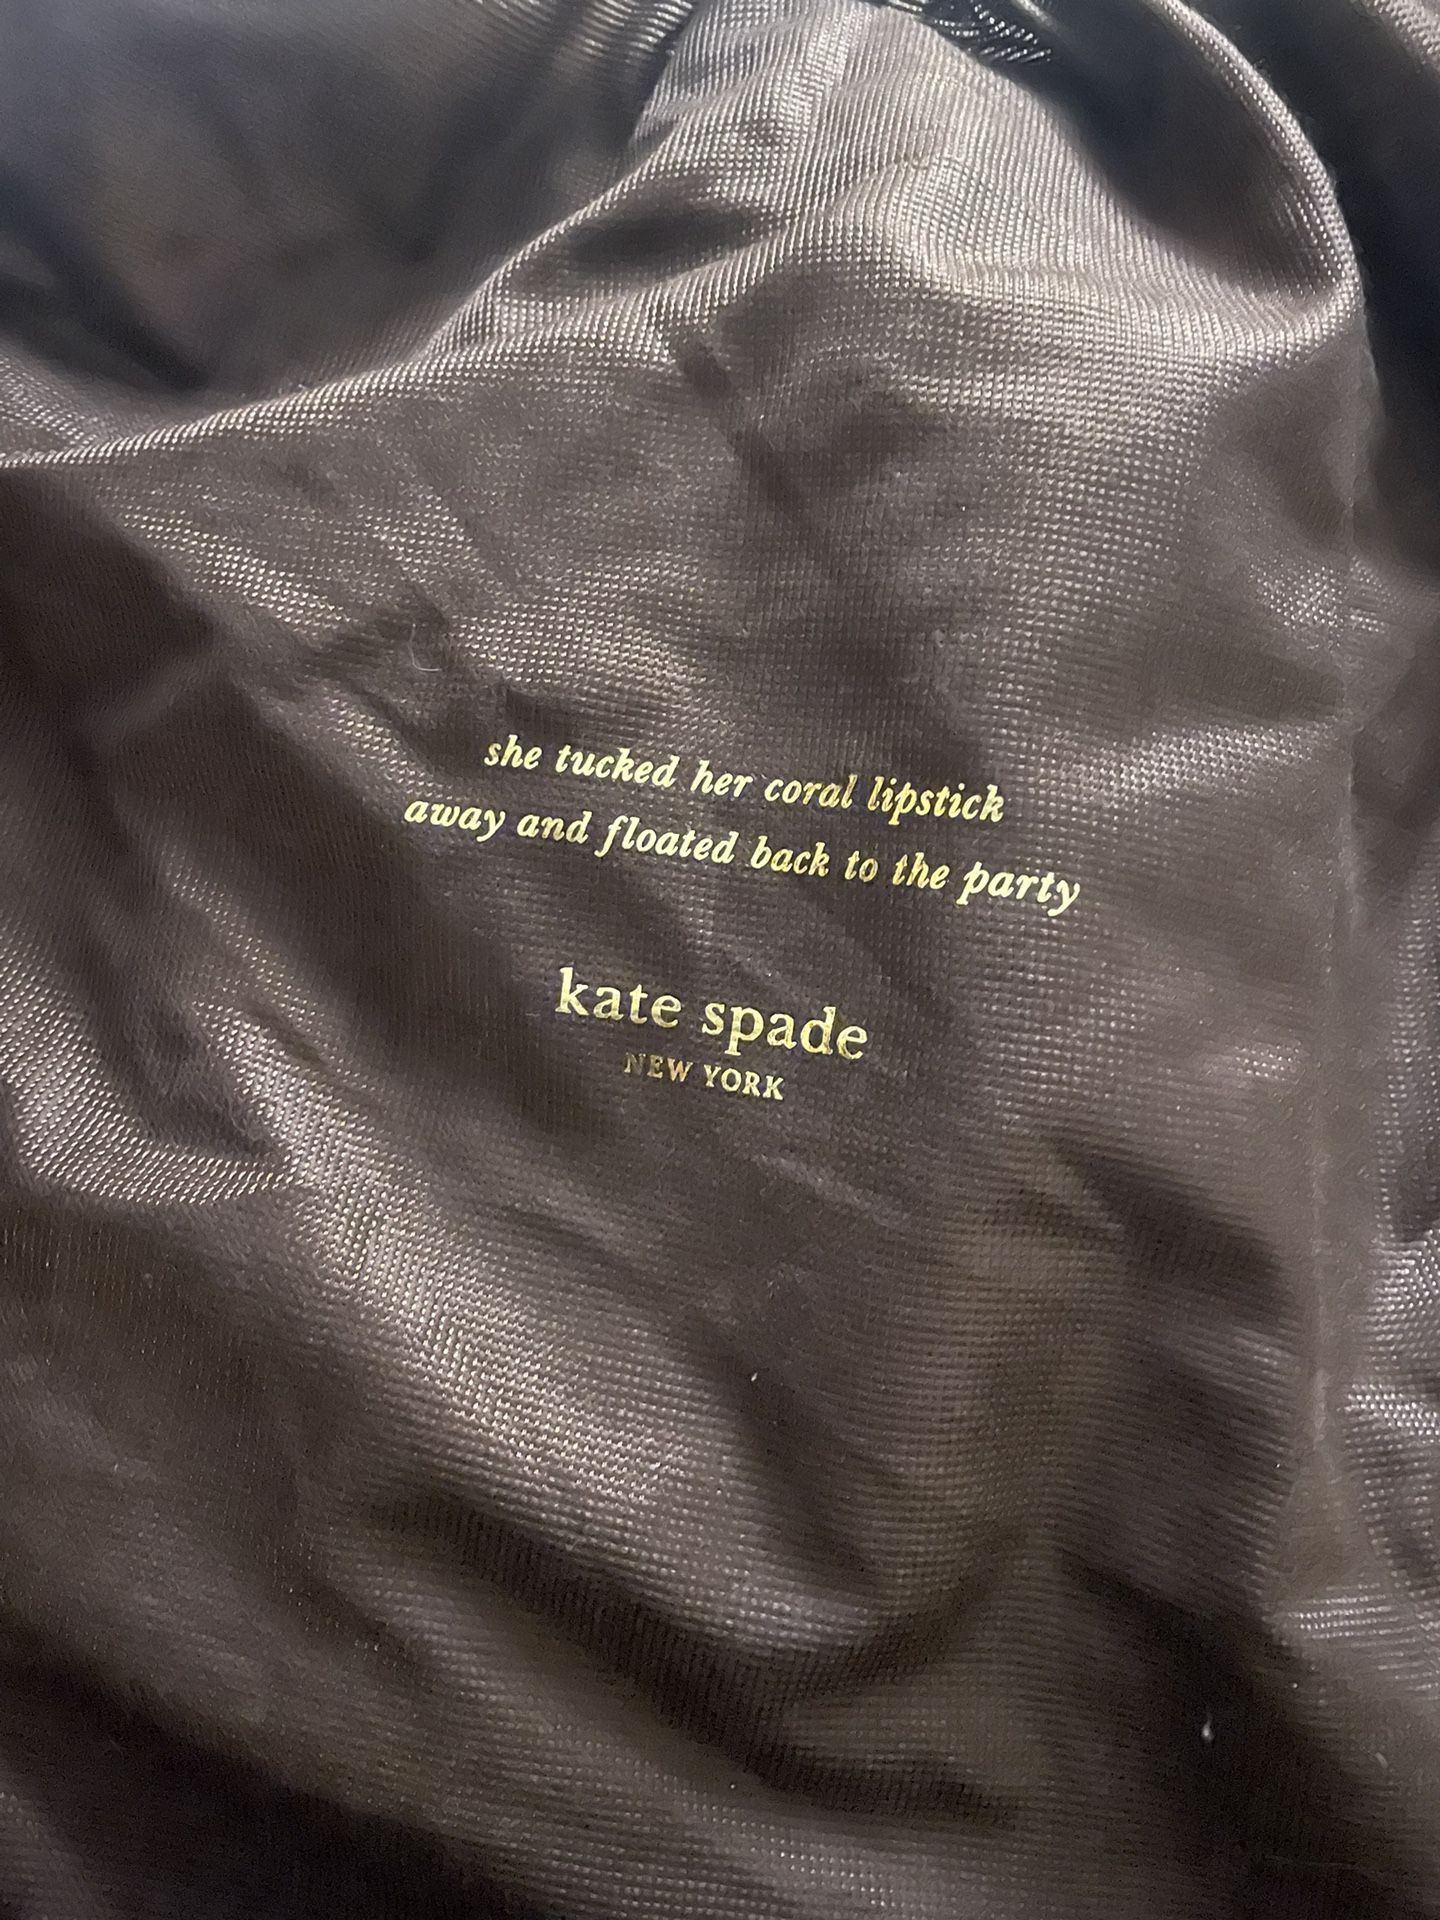 Black Vintage Kate Spade Bag for Sale in Irwindale, CA - OfferUp